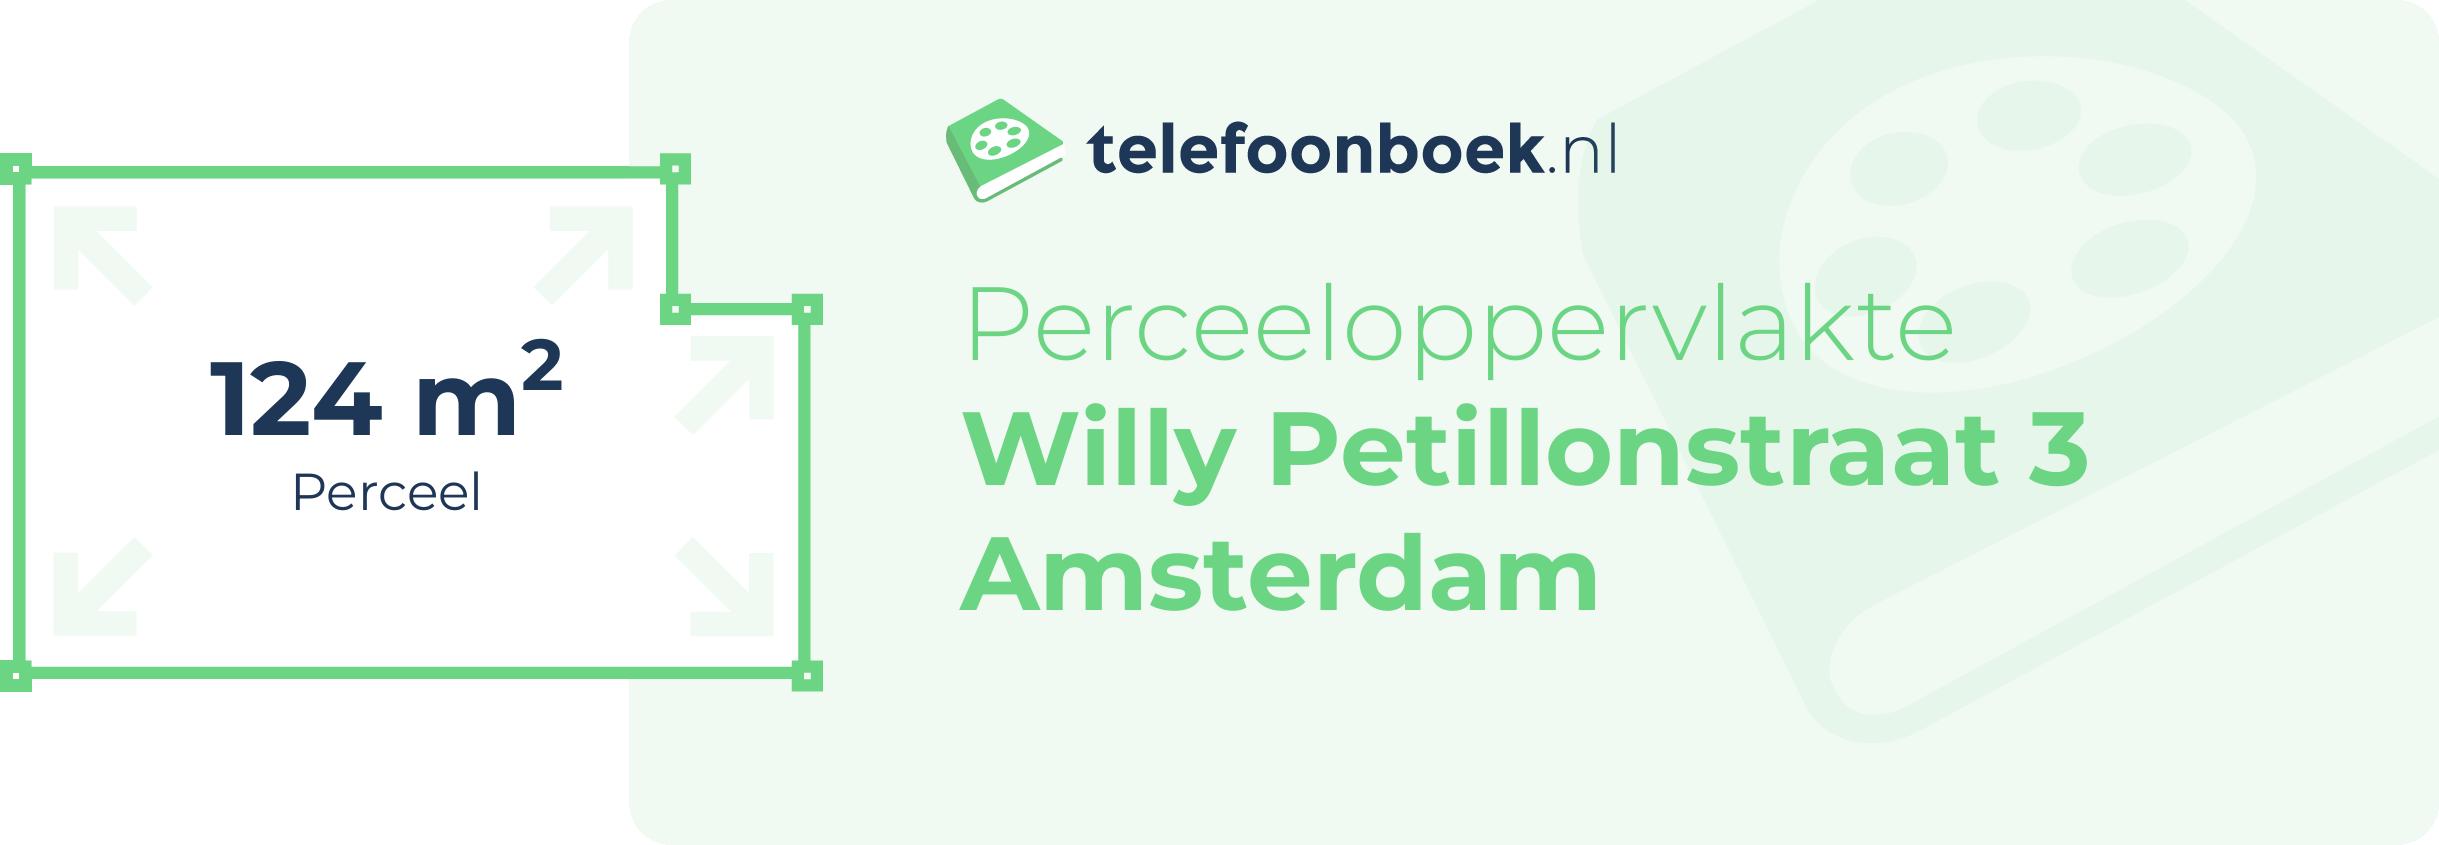 Perceeloppervlakte Willy Petillonstraat 3 Amsterdam